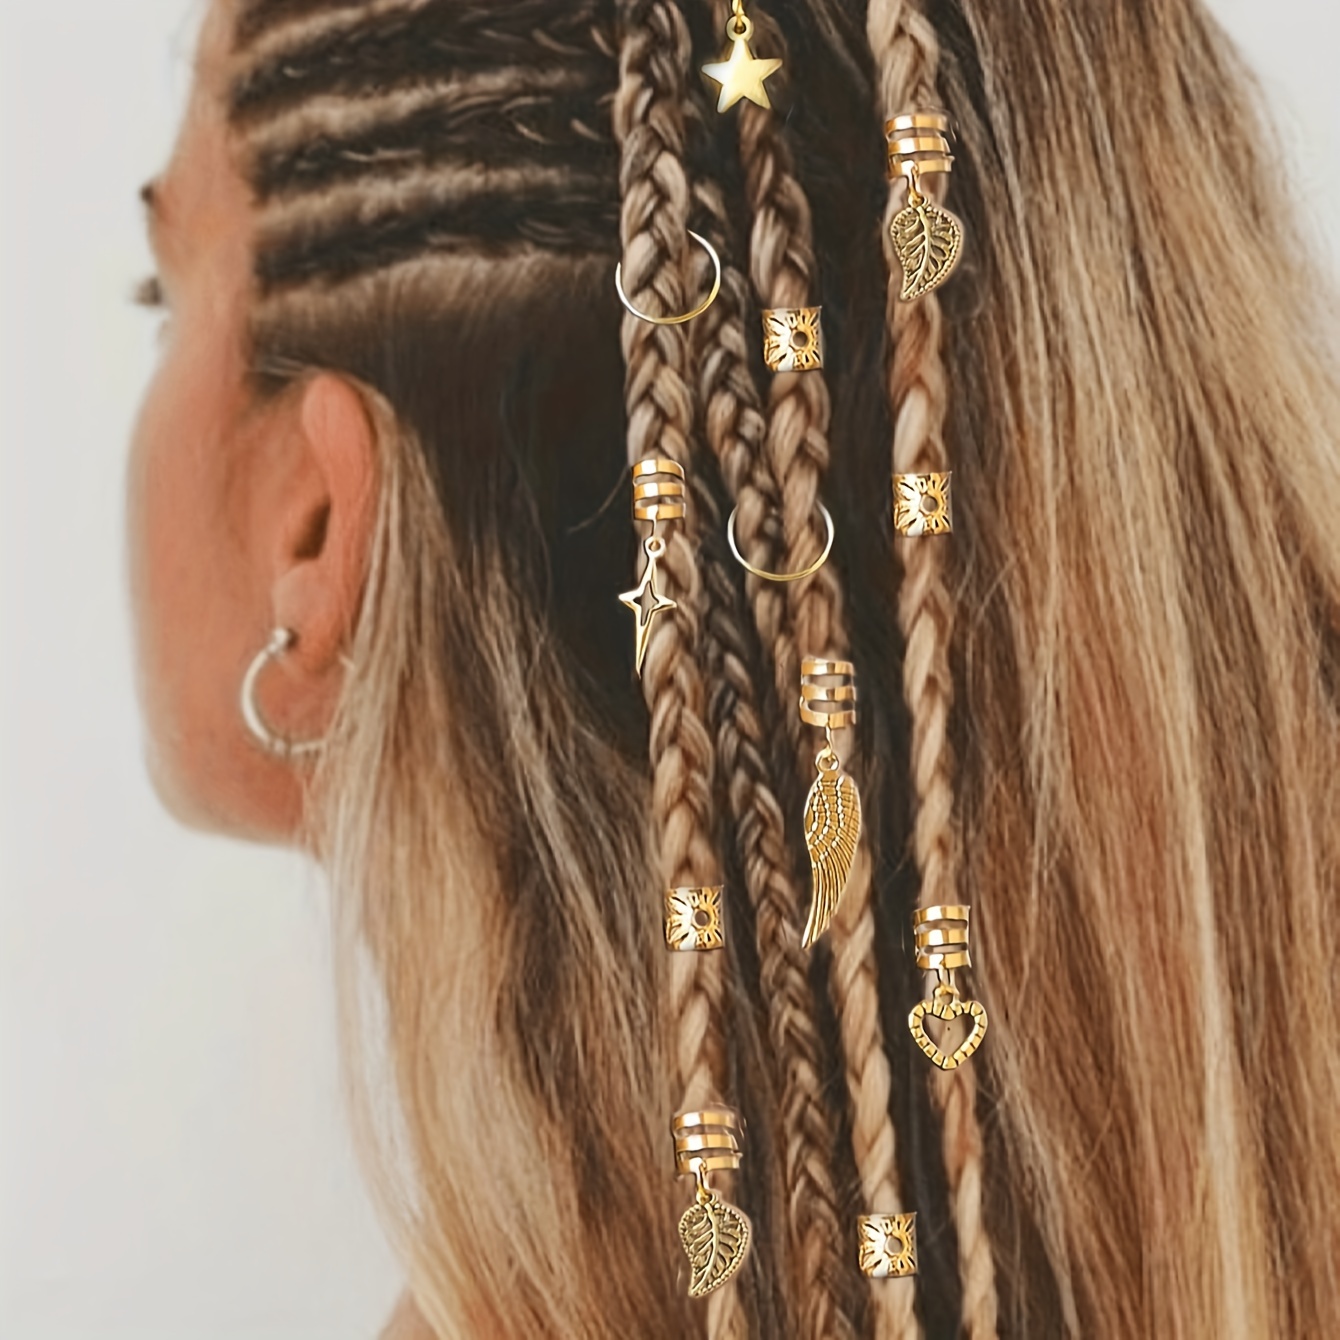 100Pcs Dreadlocks Beads Sparkling Rhinestone Fashionable Hair Braiding  Rings For